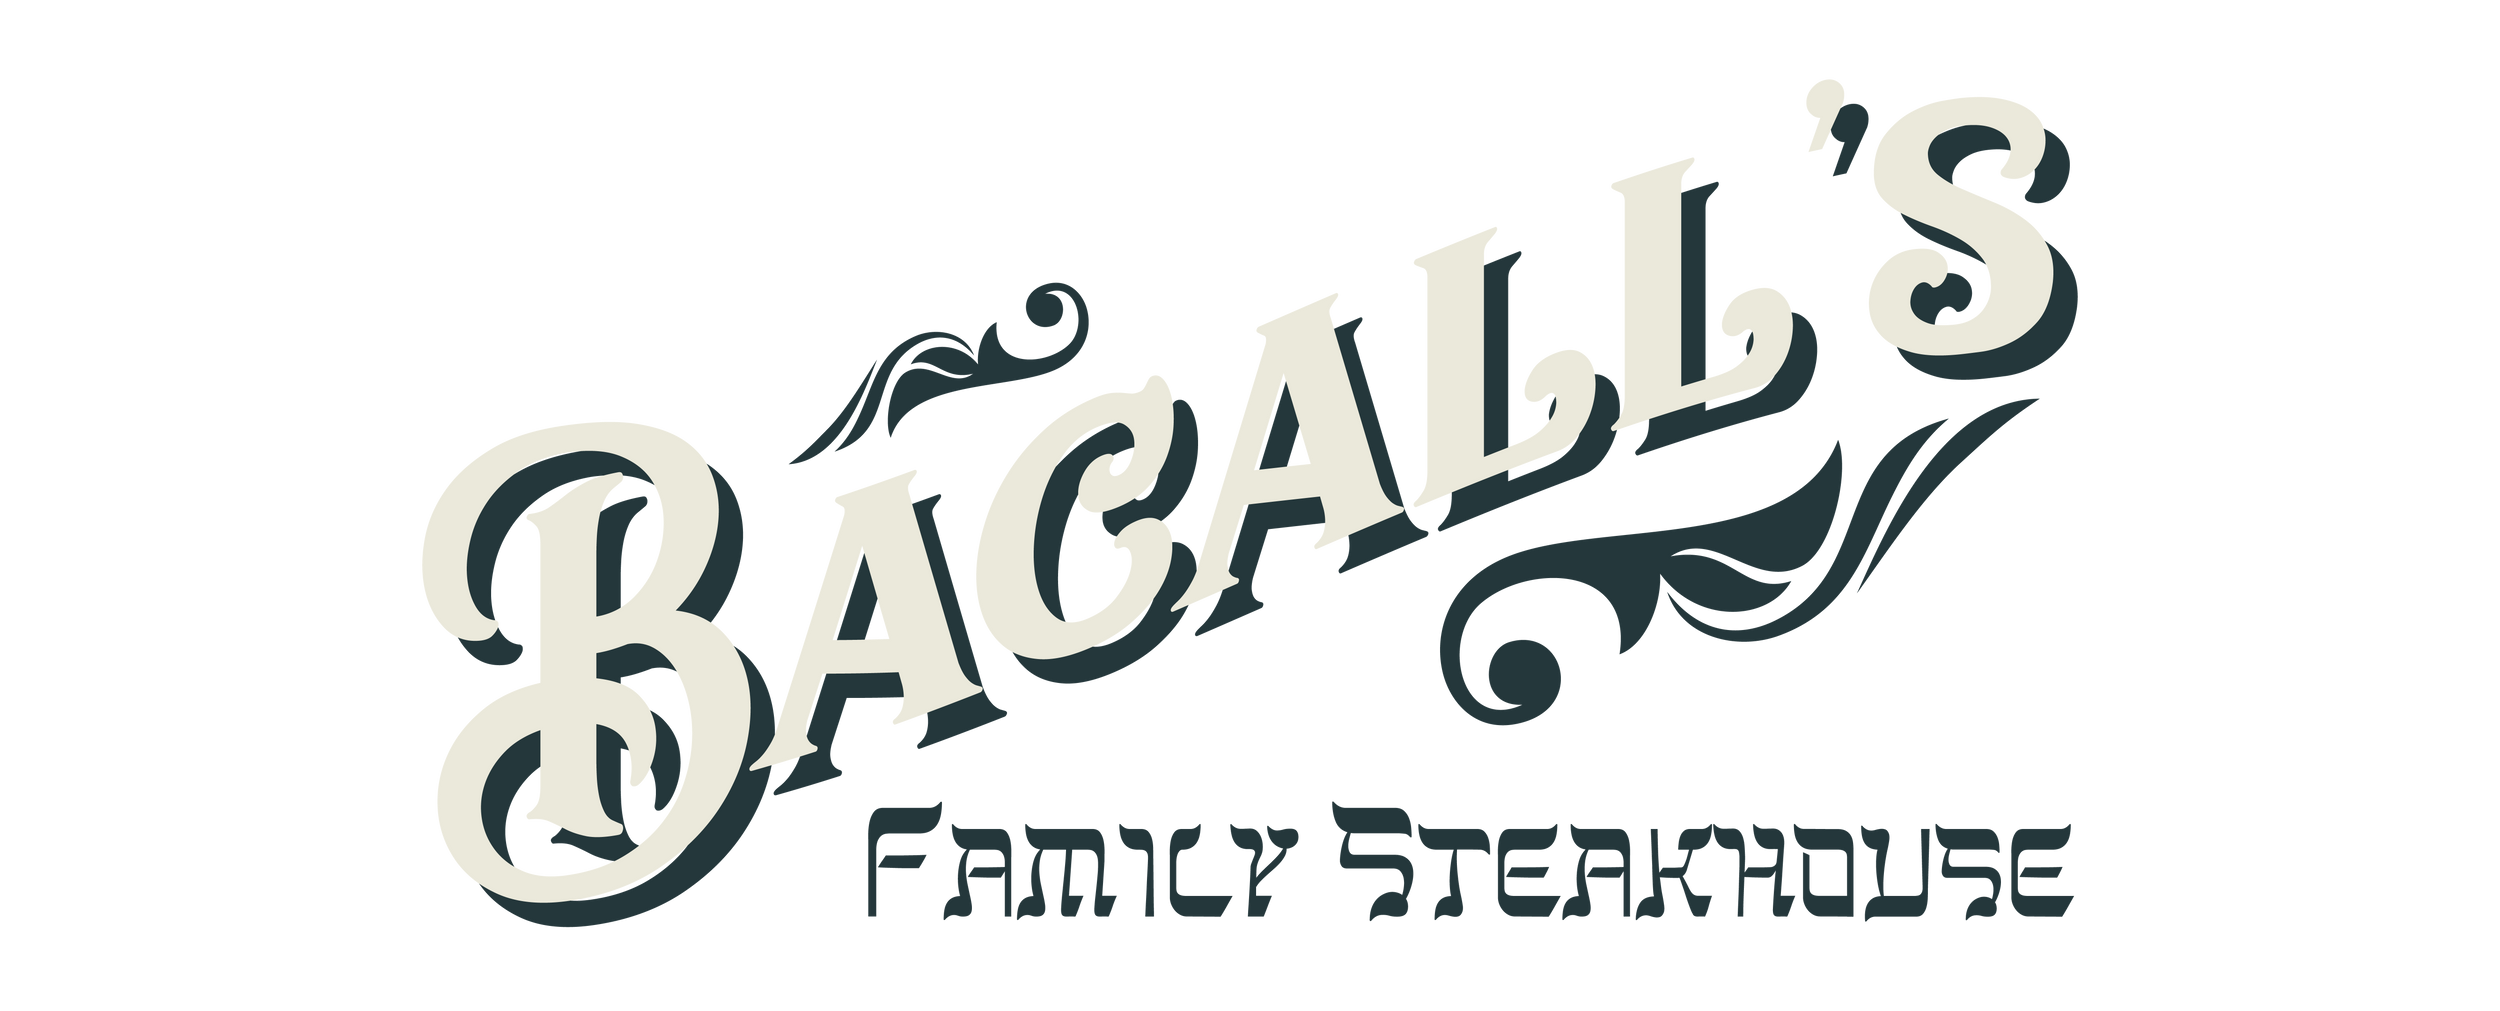 Bacall's logo